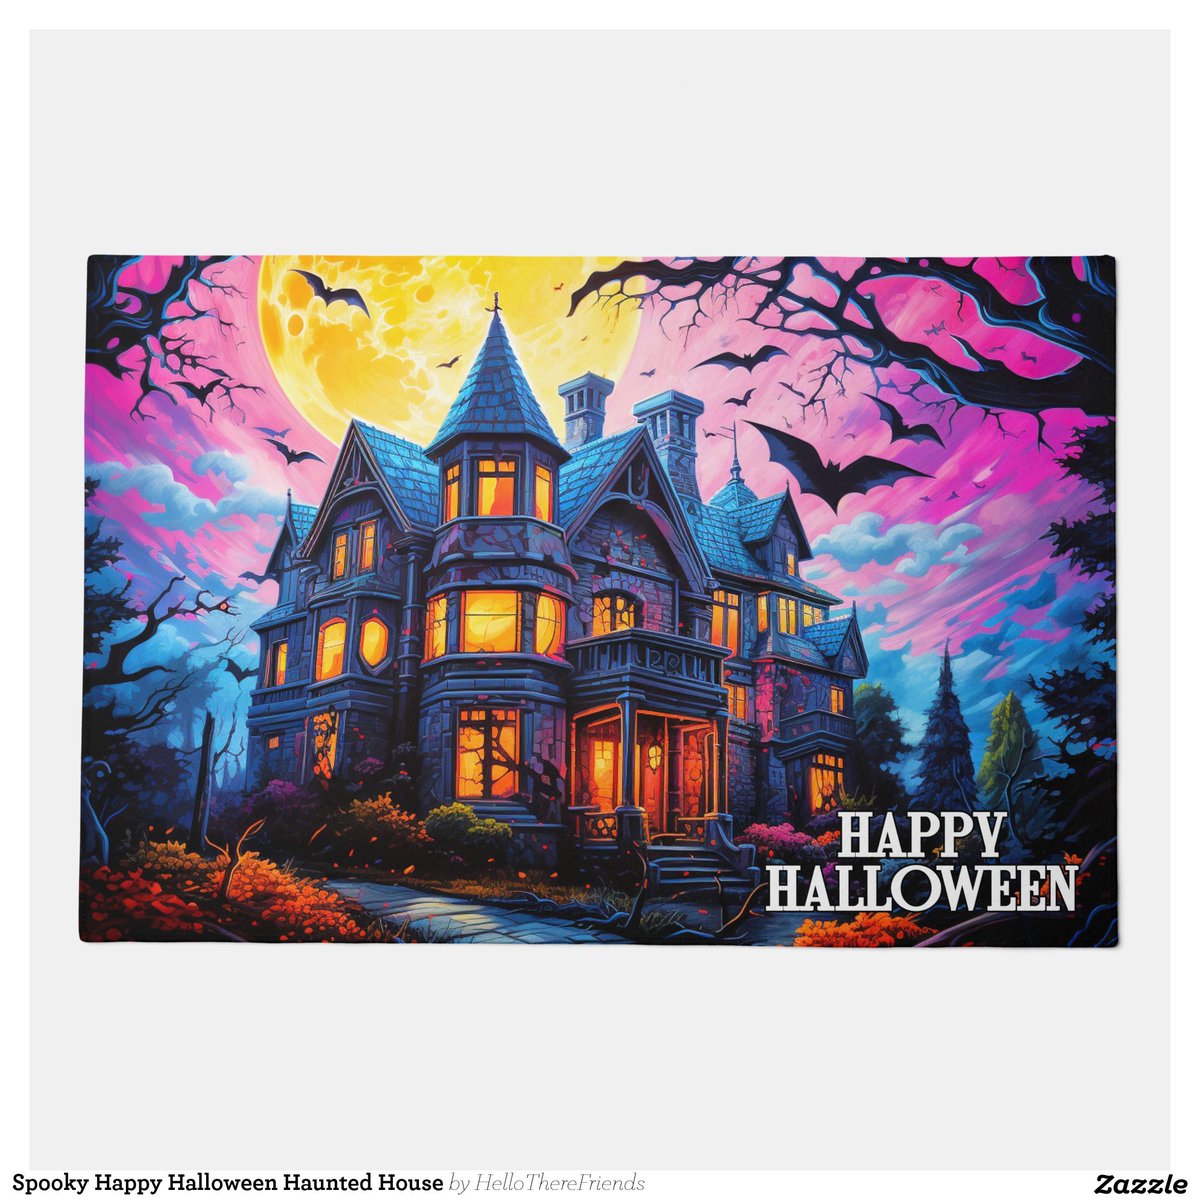 Spooky Happy Halloween Haunted House Doormat→zazzle.com/z/ovud5x9k?rf=…

#WelcomeMat #WelcomeDoormat #HappyHalloween #Halloween2024 #TrickOrTreat #HauntedHouse #HomeDecor #HolidayDecor #Zazzle